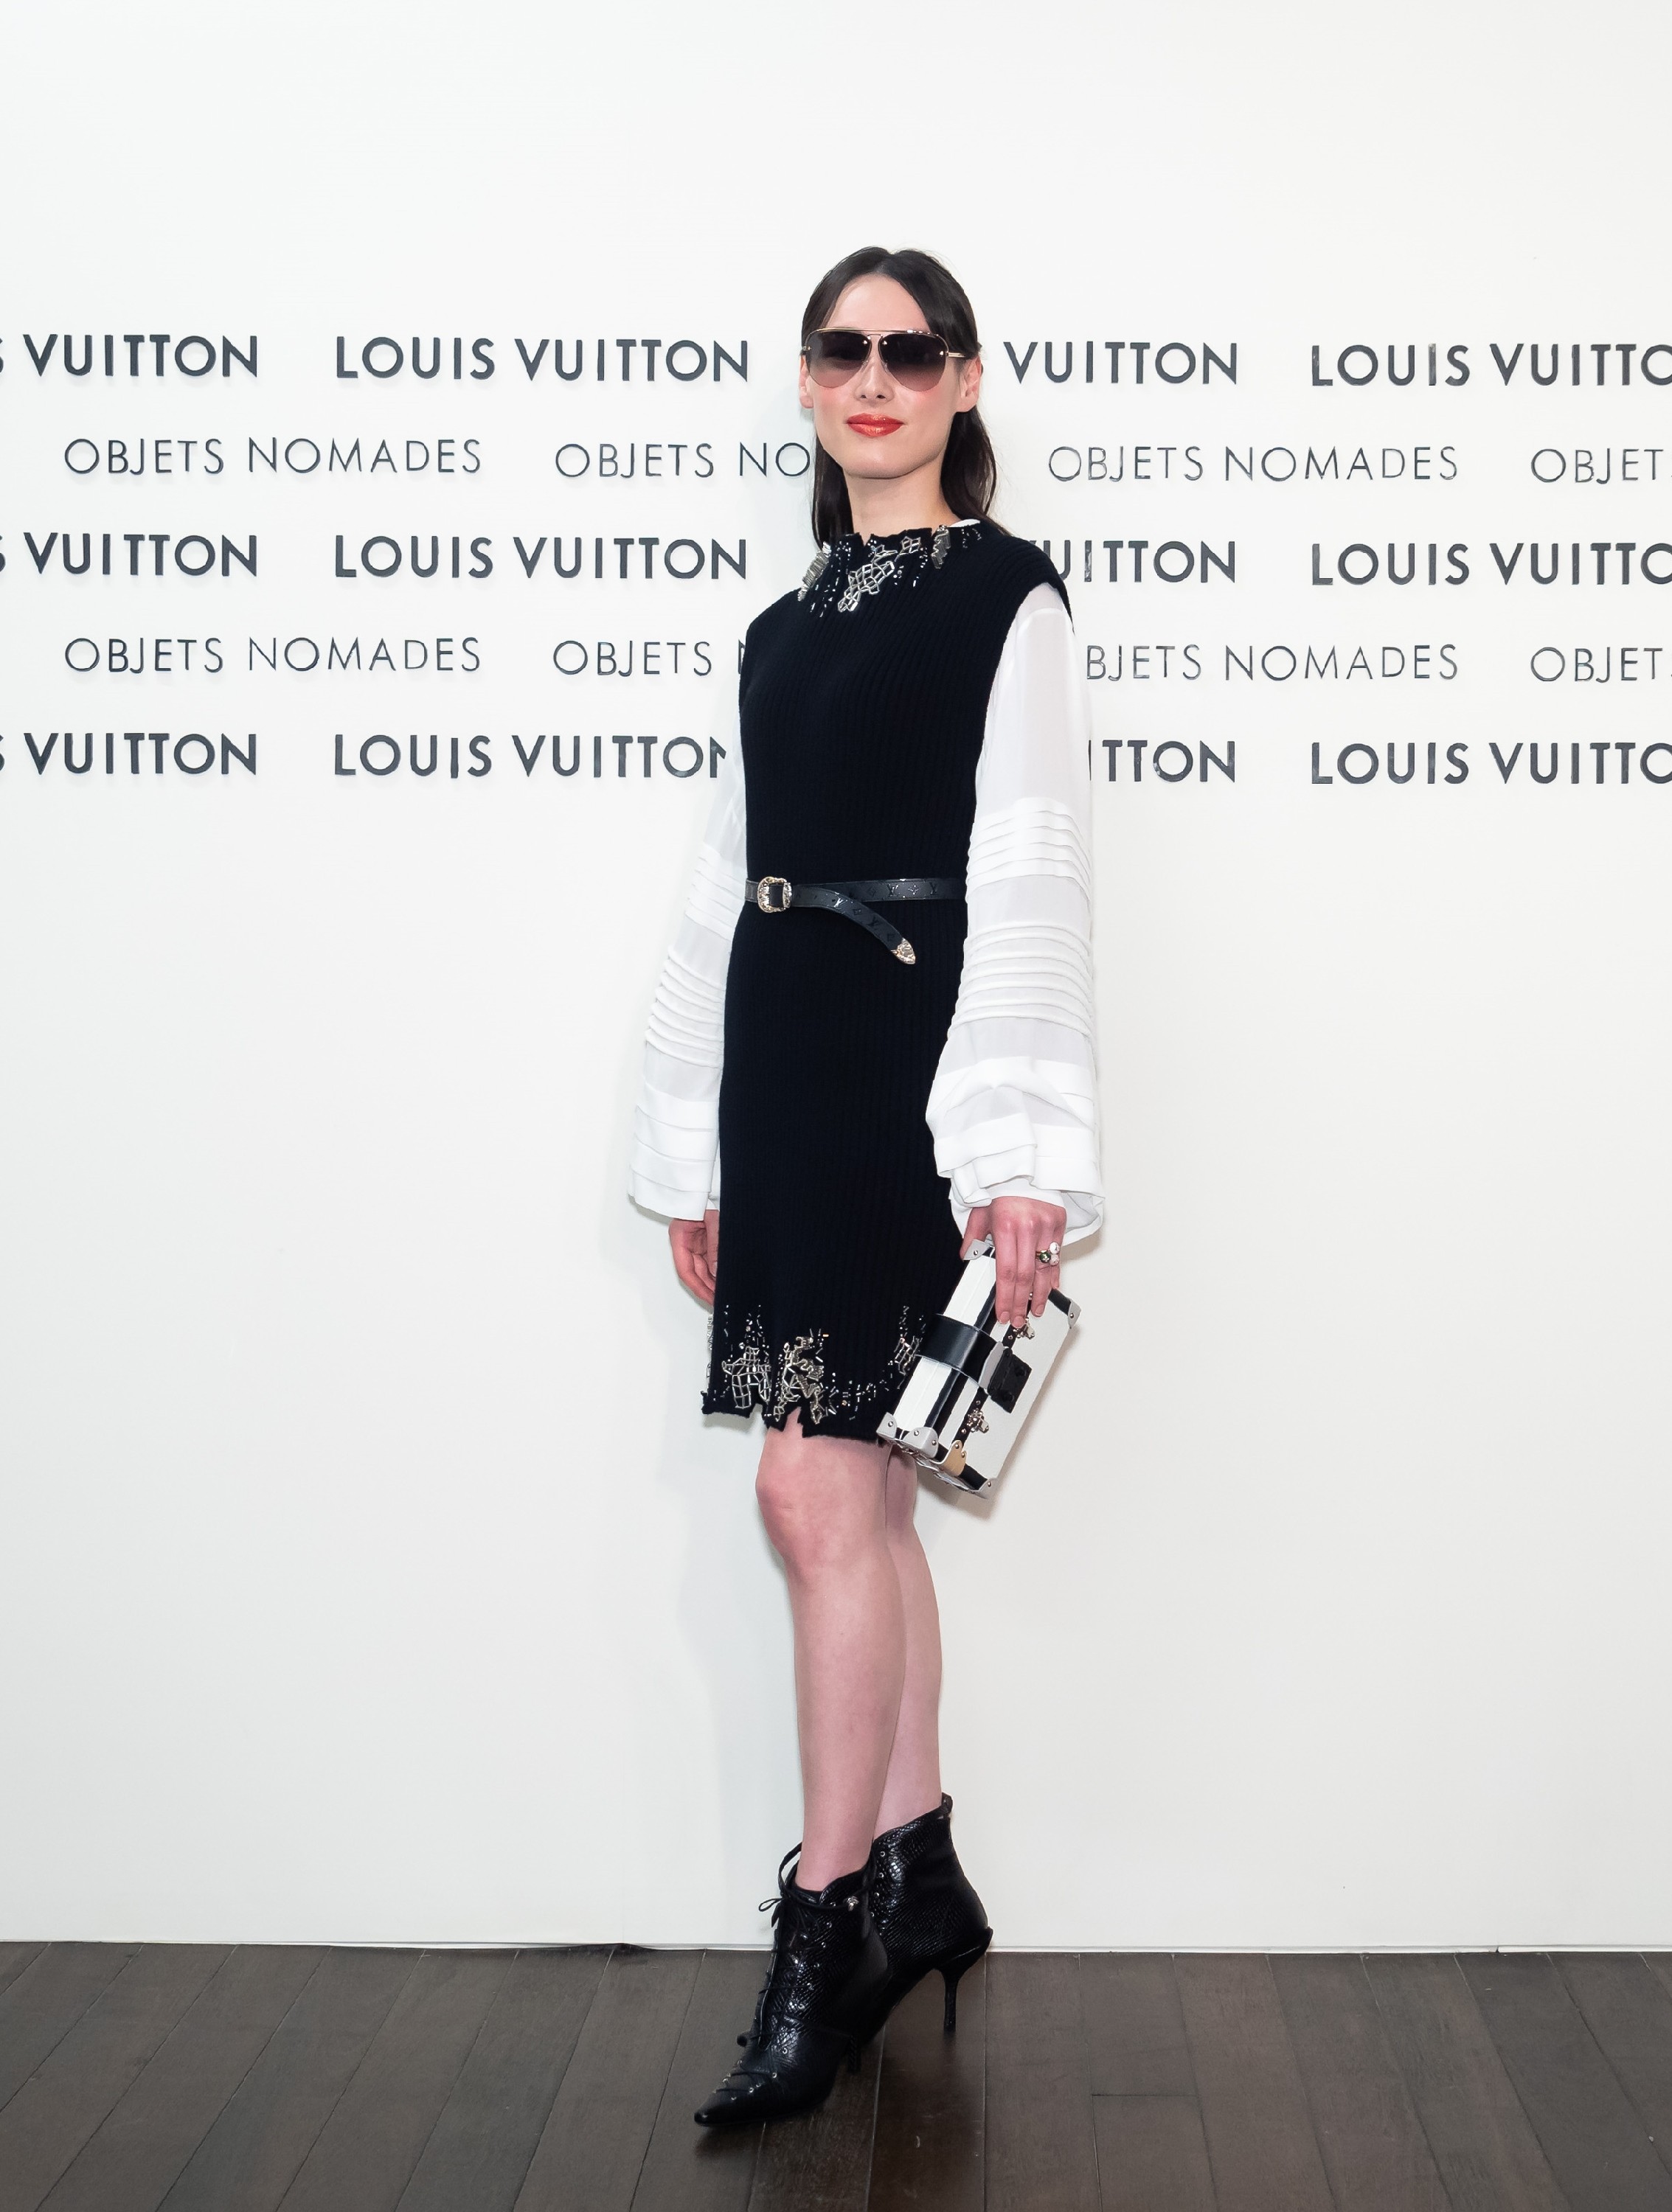 Louis-Vuitton-Celebrities-Cruise-2019-05-Delphine-Arnault,-Nicolas